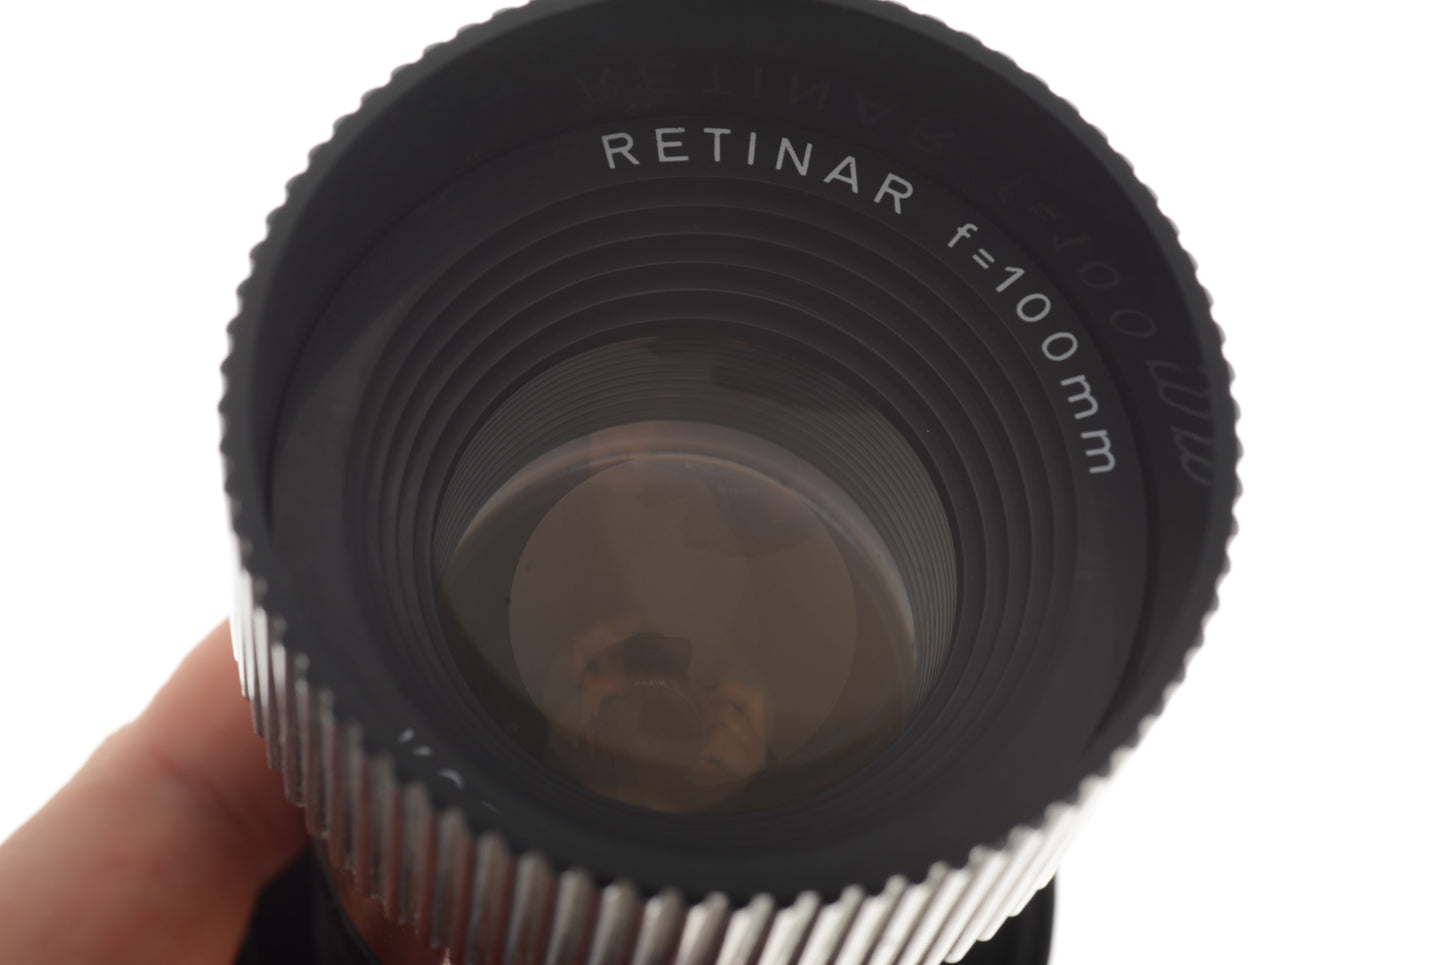 Kodak 100mm Retinar